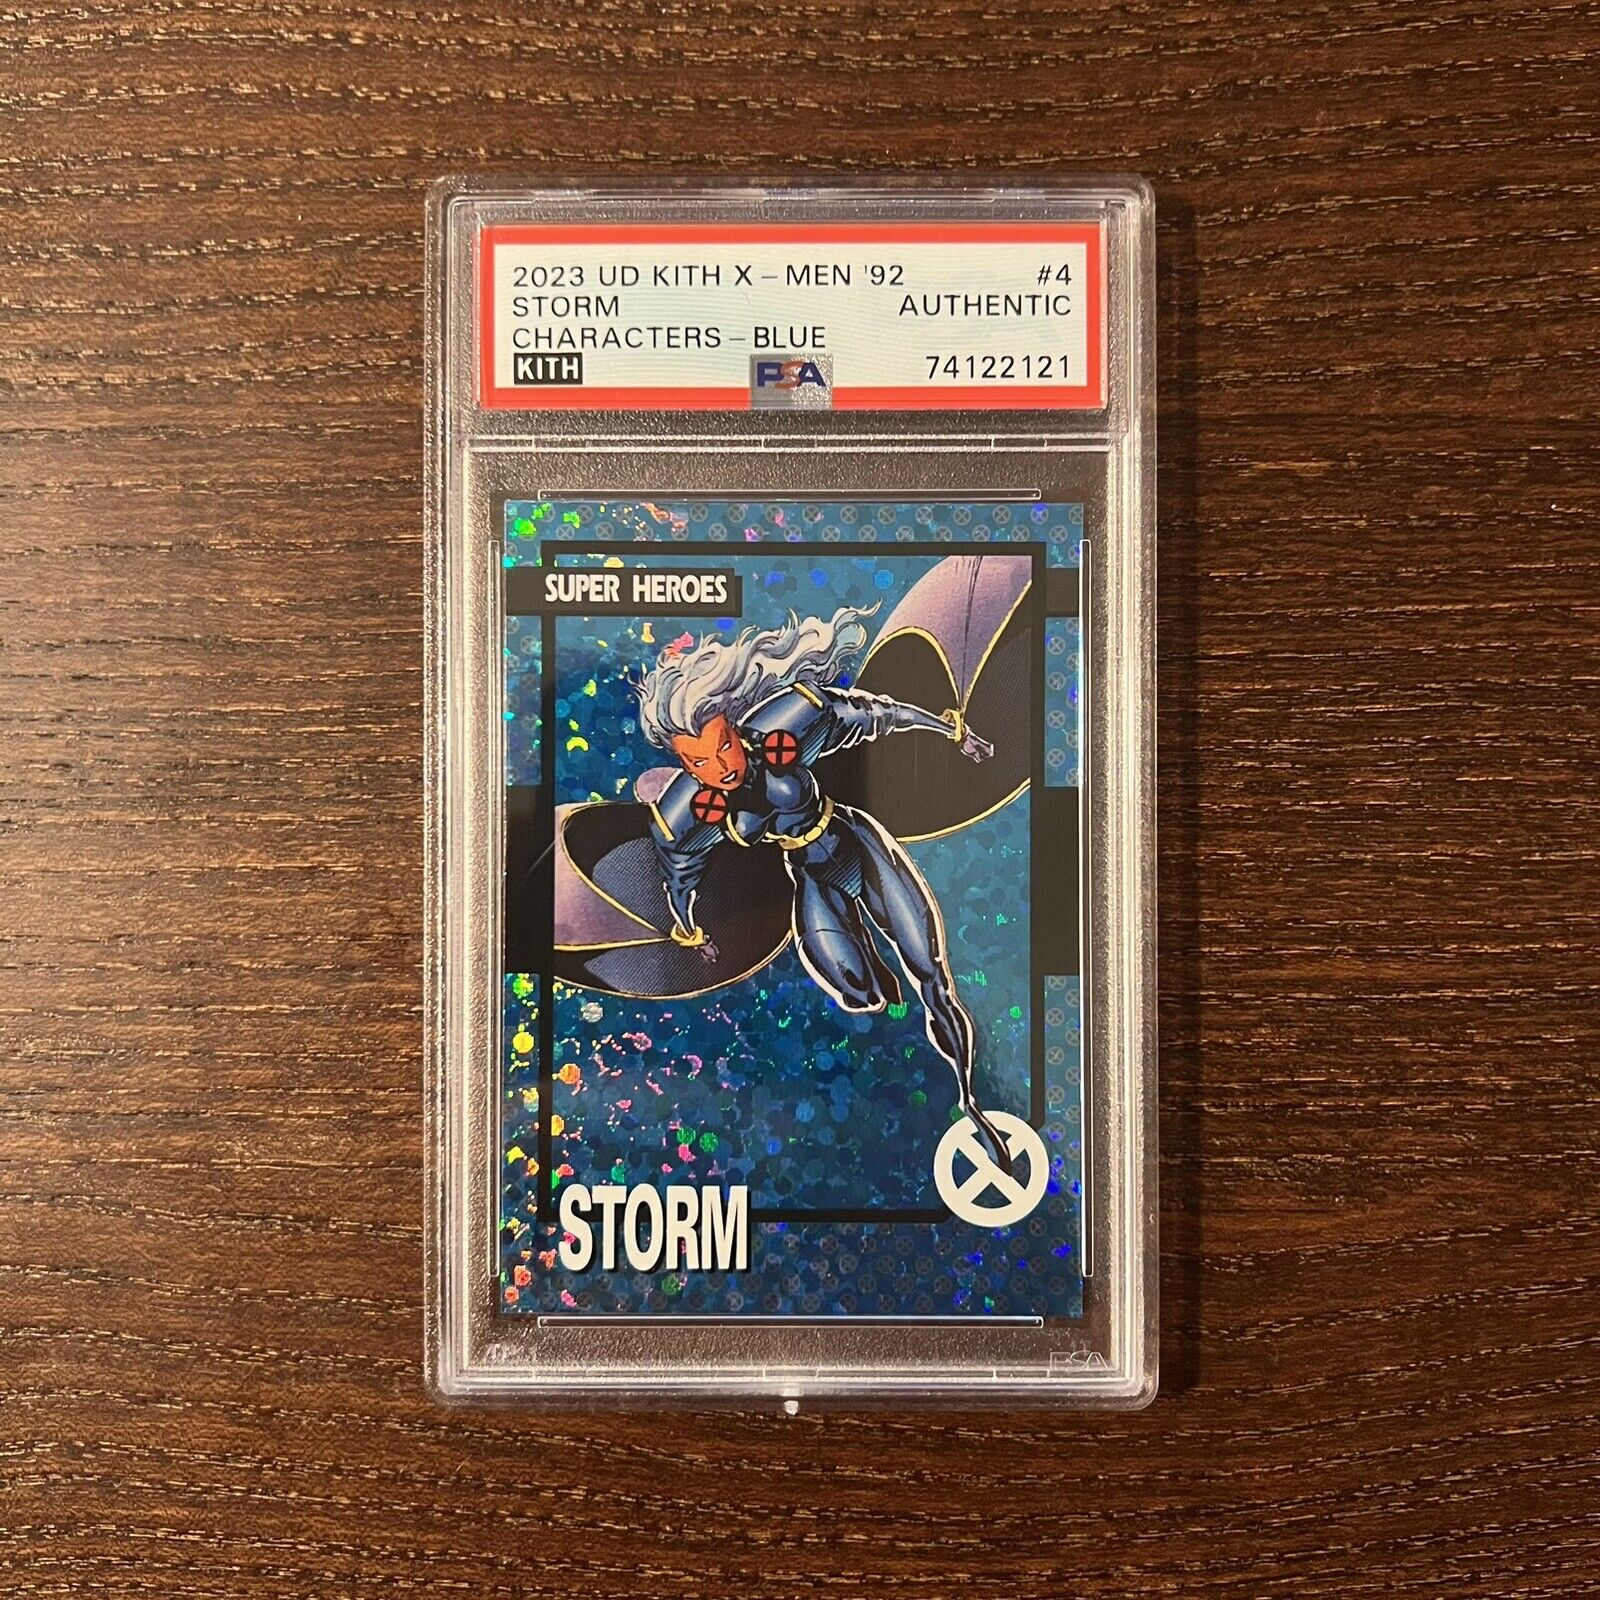 KITH X-Men Asics PSA Card Storm 1/50 Blue Hologram Upper Deck